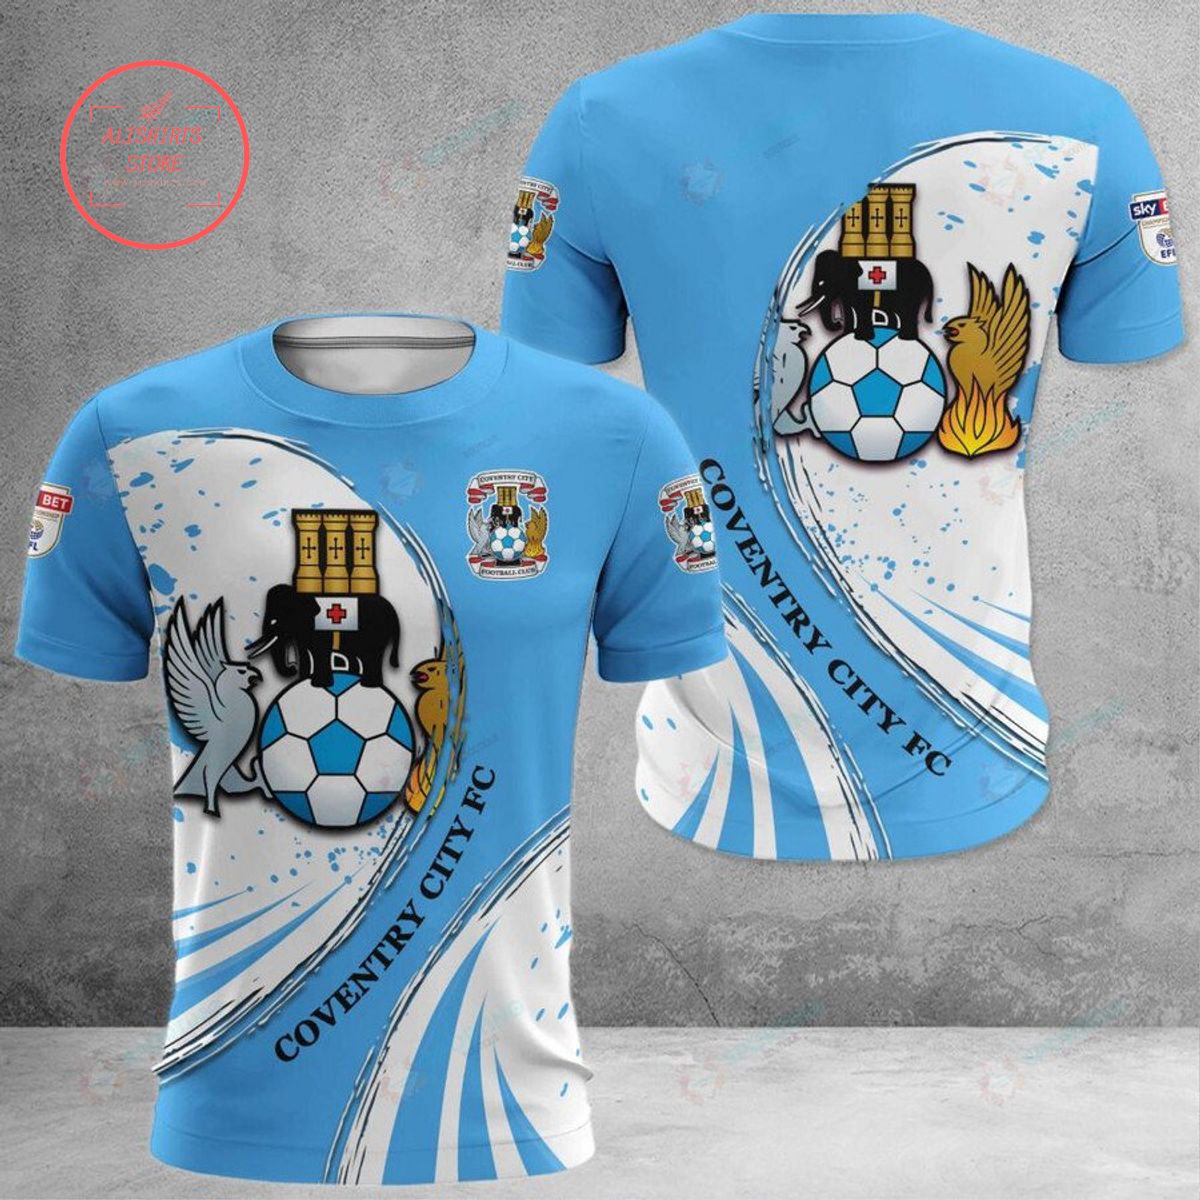 EFL Coventry City FC Polo Shirt